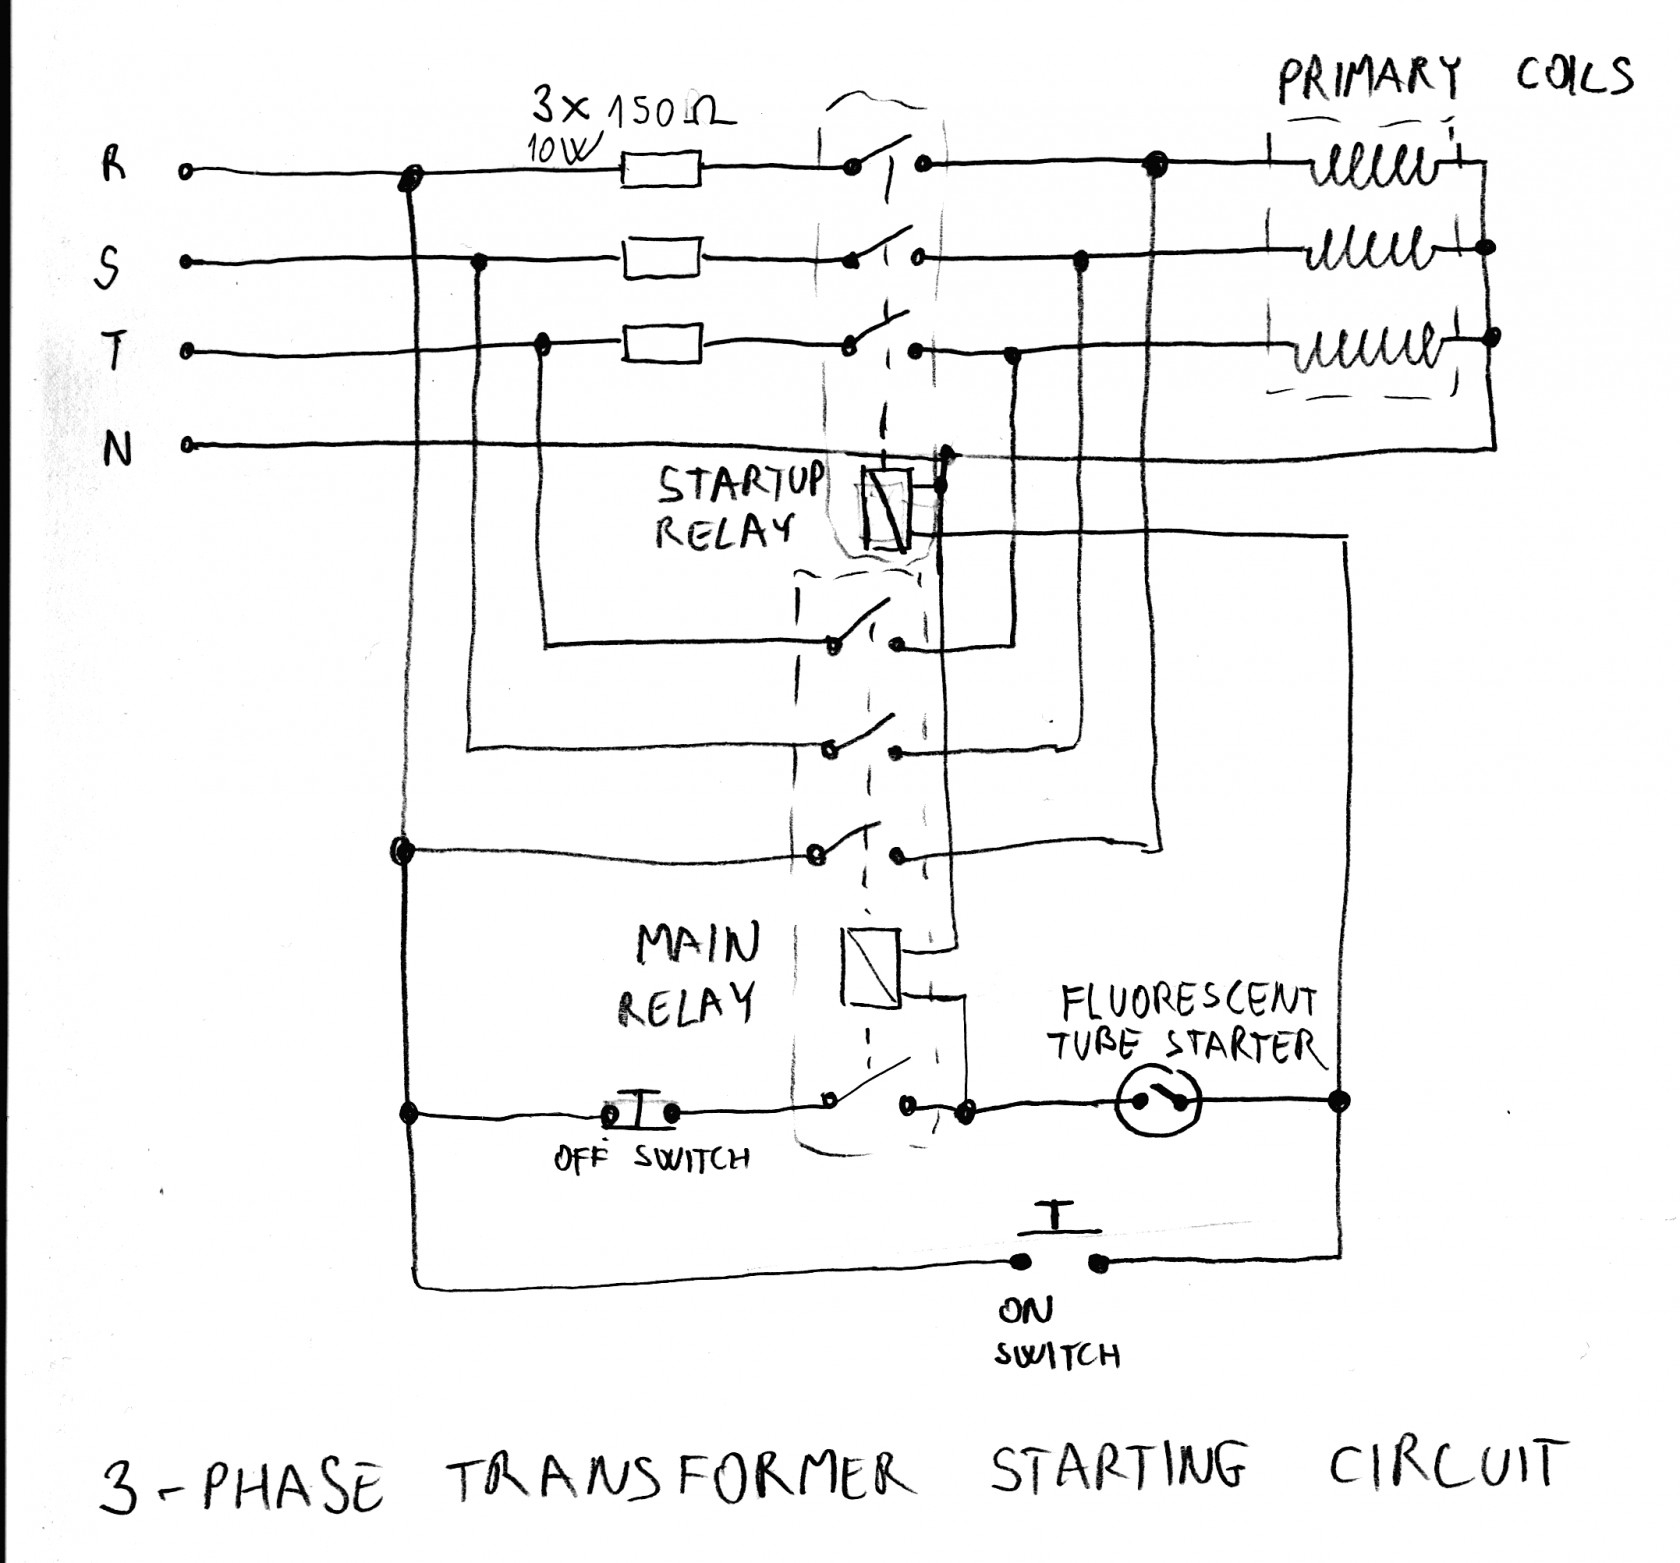 480V To 120V Transformer Wiring Diagram 480 To 208 Transformer Diagram Wiring Diagram Bookmark